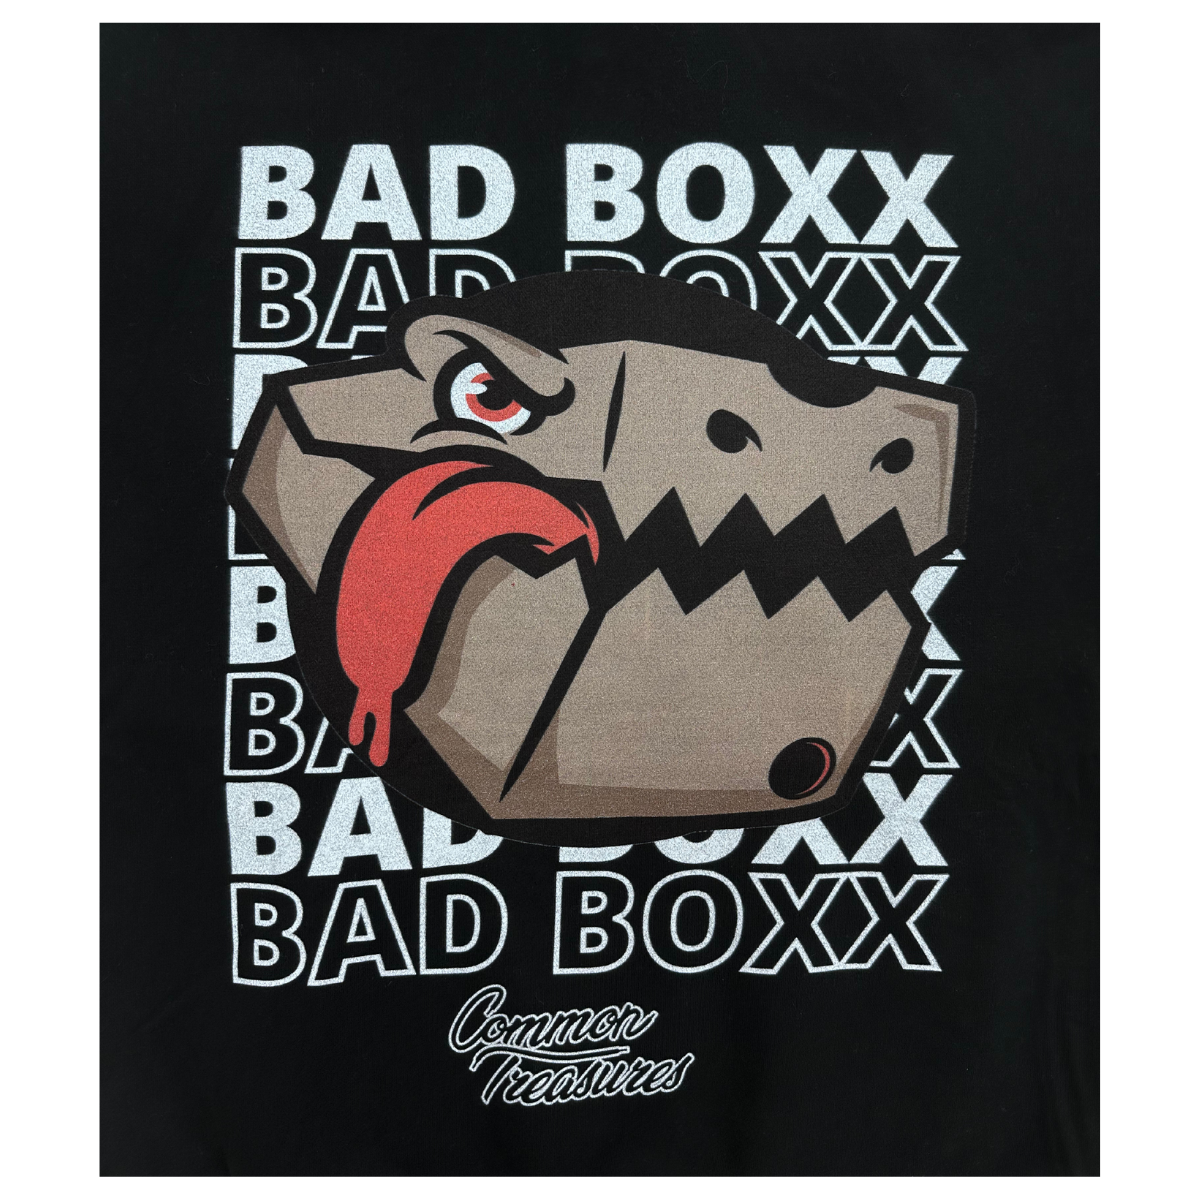 Bad Boxx Hoodie - Black